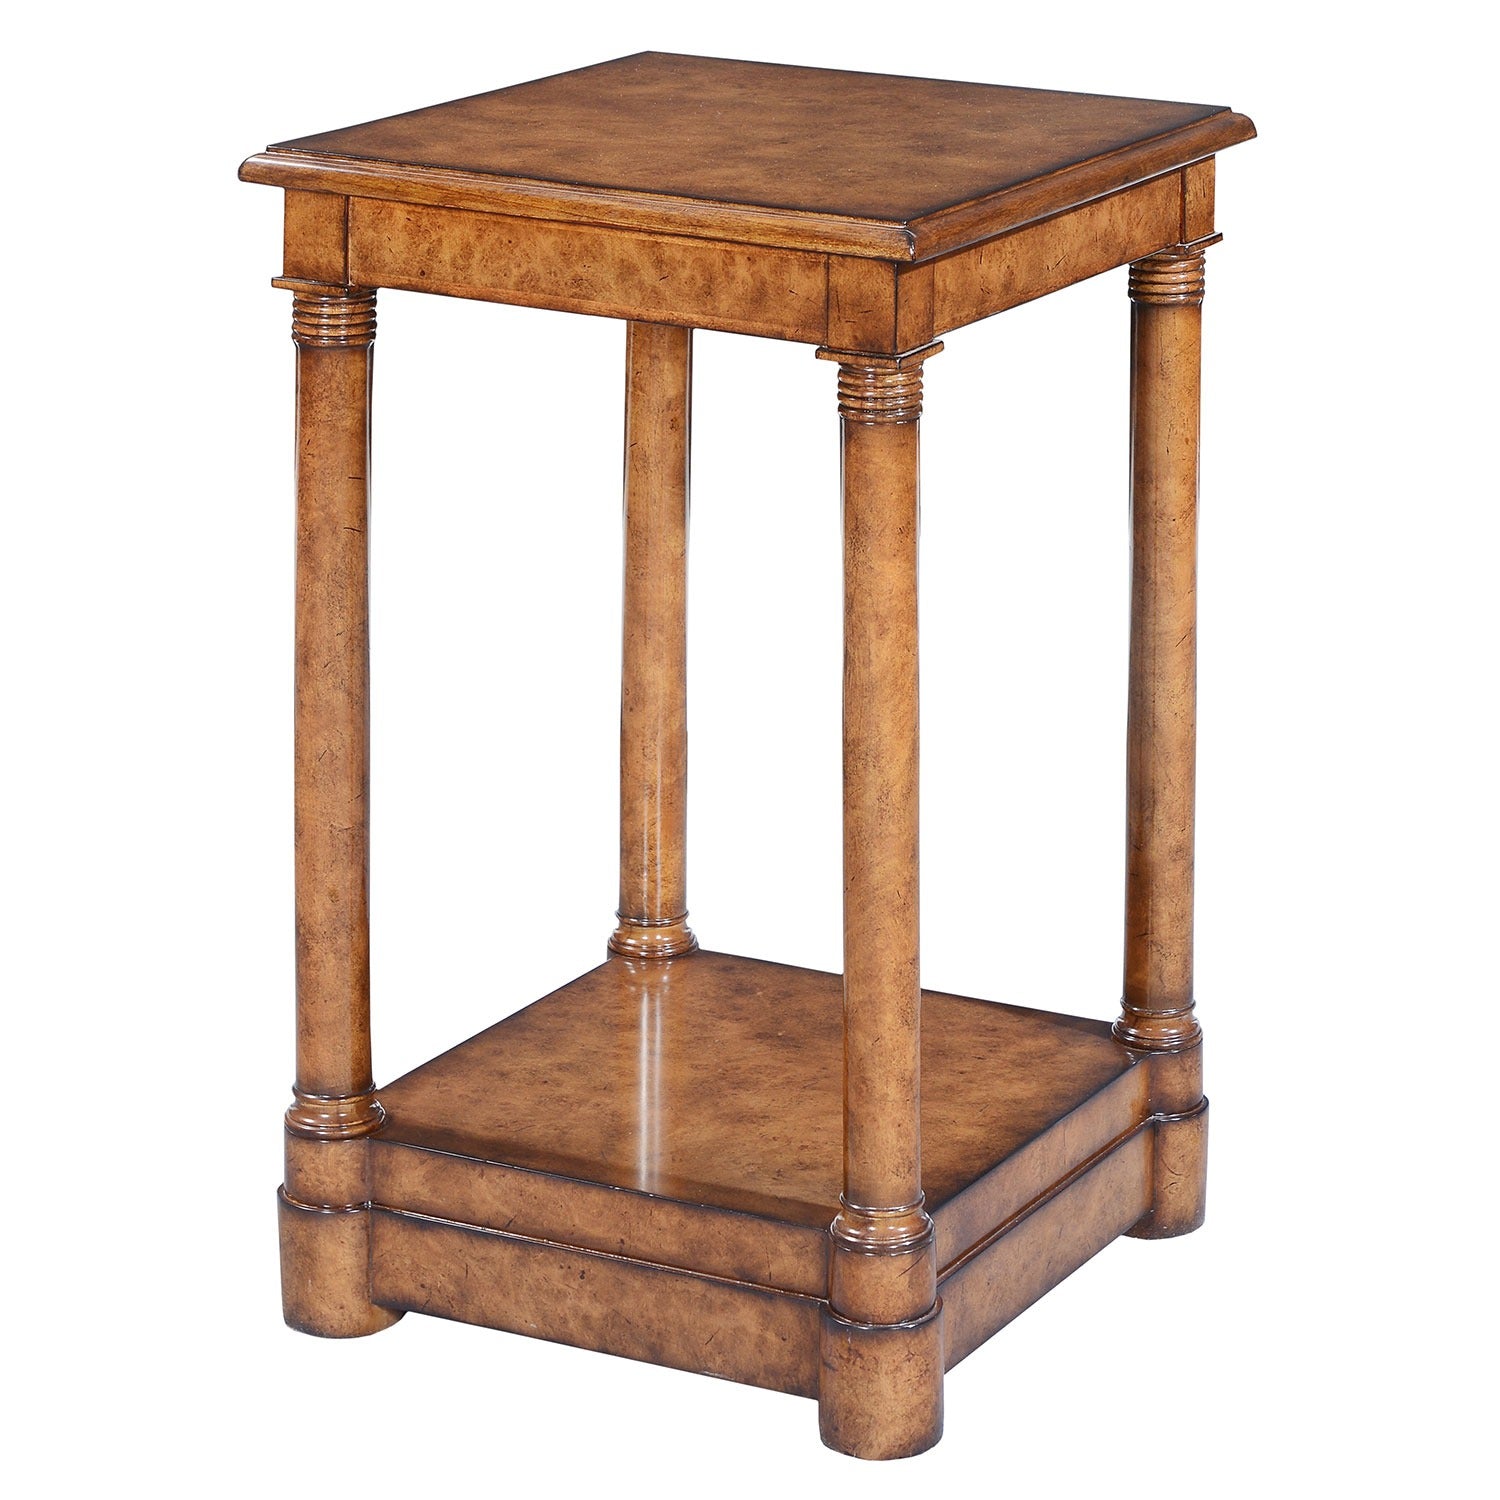 Empire style tall side table - Burr oak